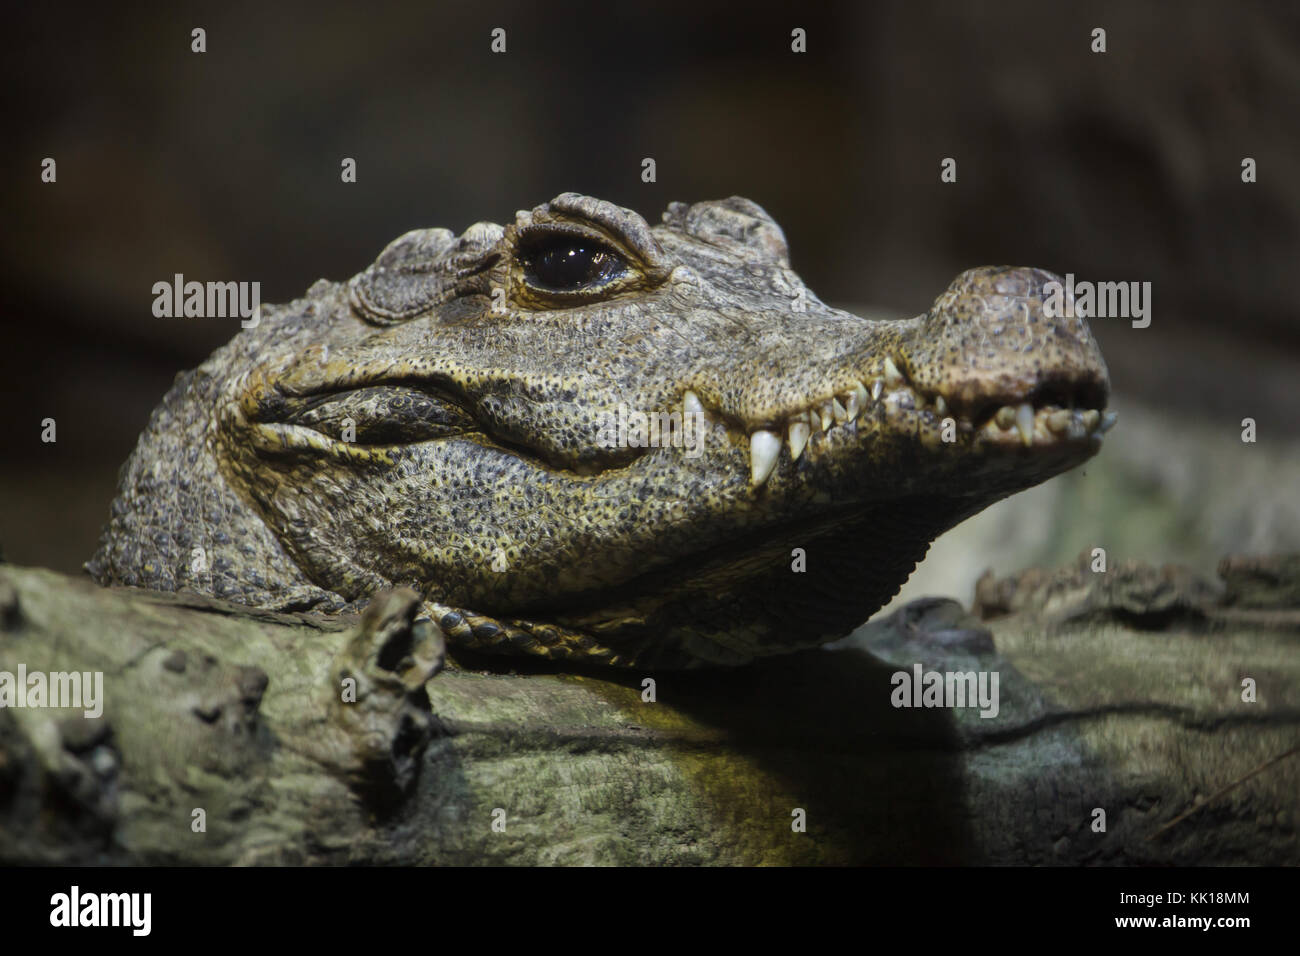 Dwarf crocodile (Osteolaemus tetraspis), also known as the African dwarf crocodile. Stock Photo